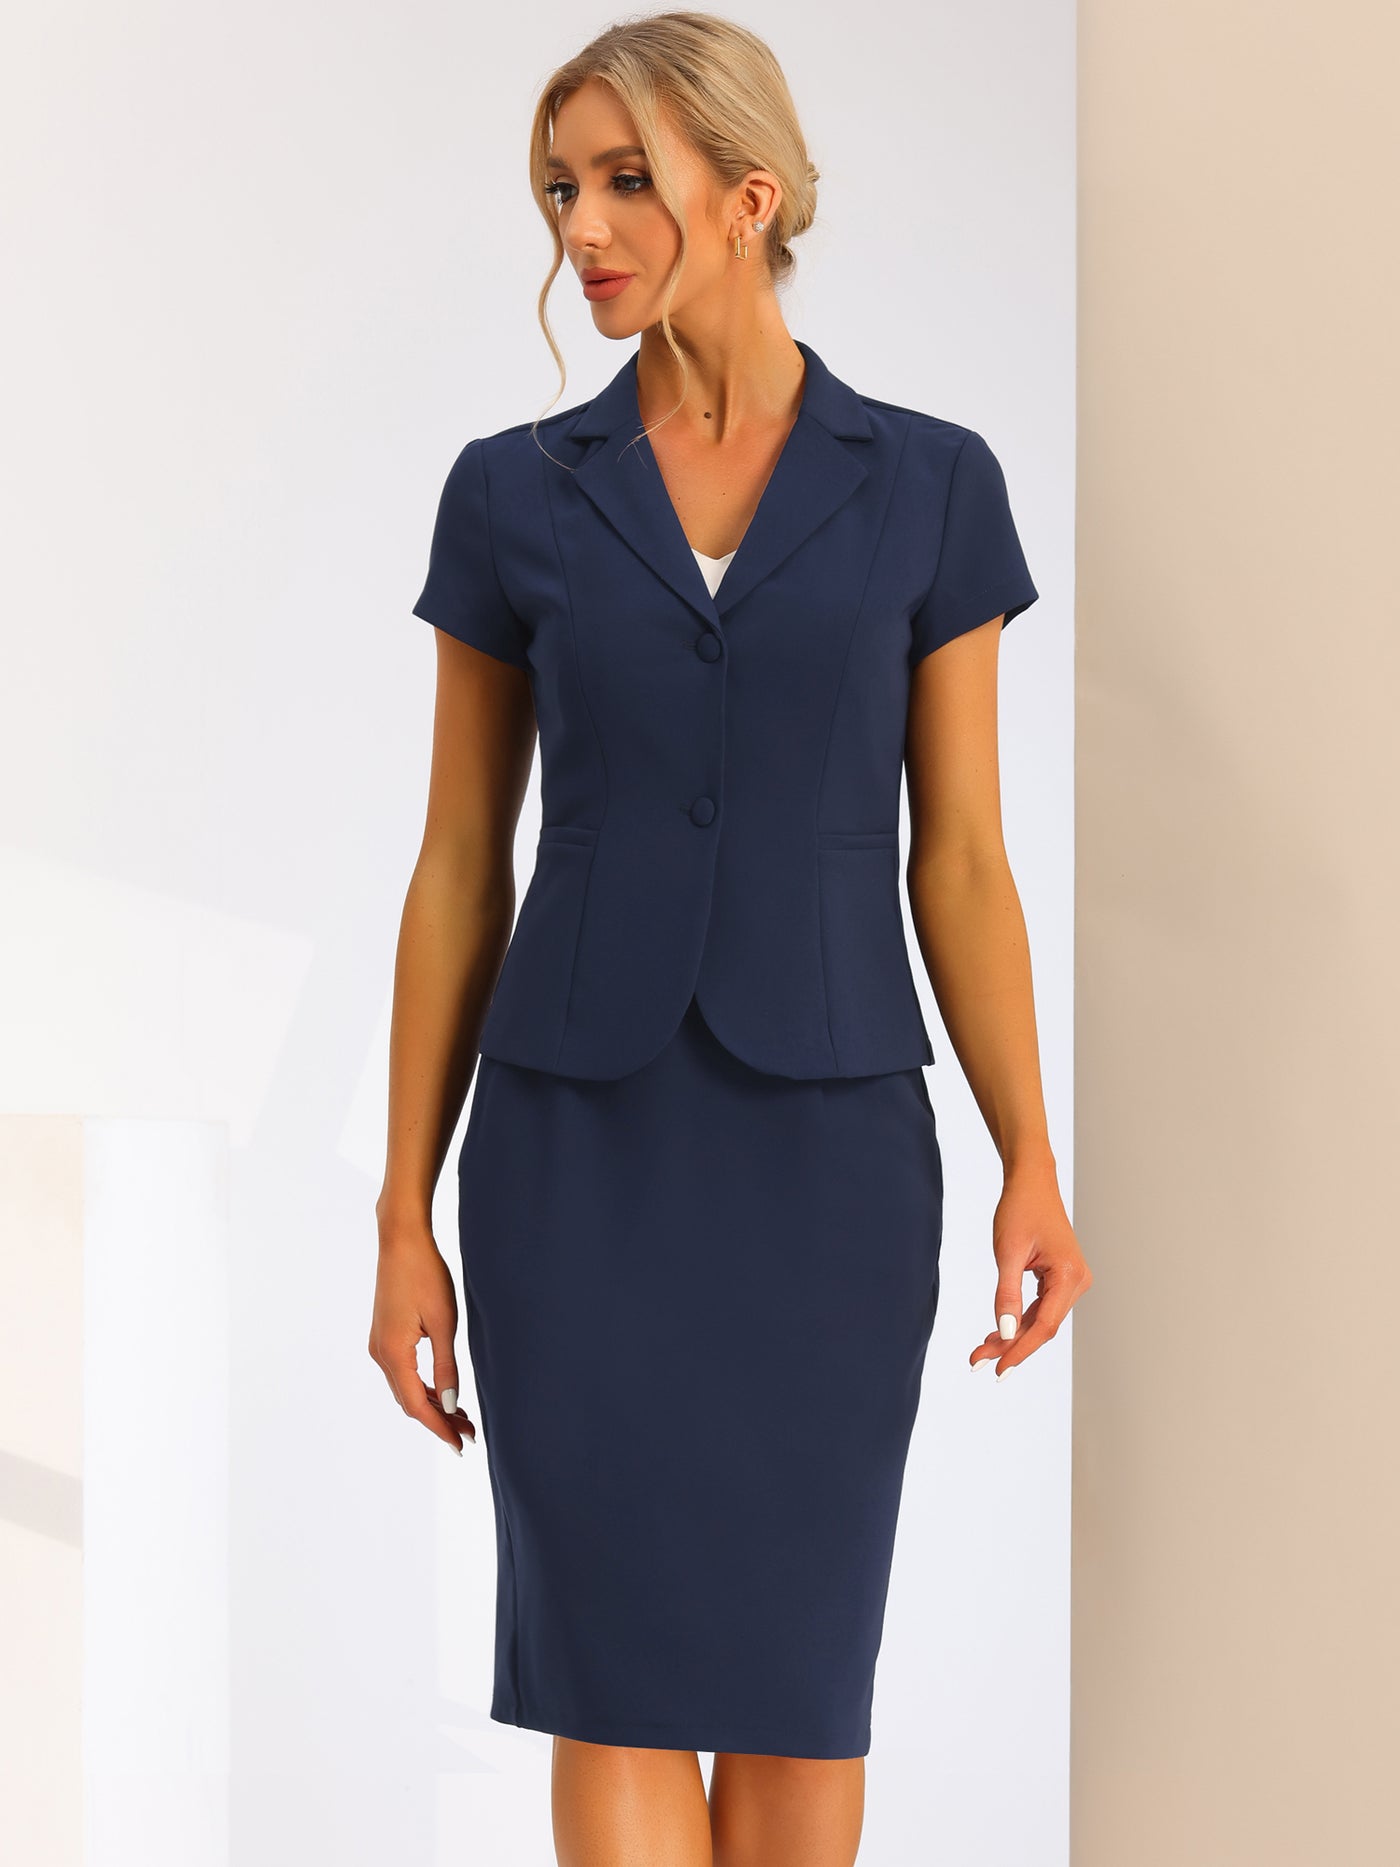 Allegra K Business 2 Piece Suit Set Short Sleeve Blazer Jacket Pencil Skirt